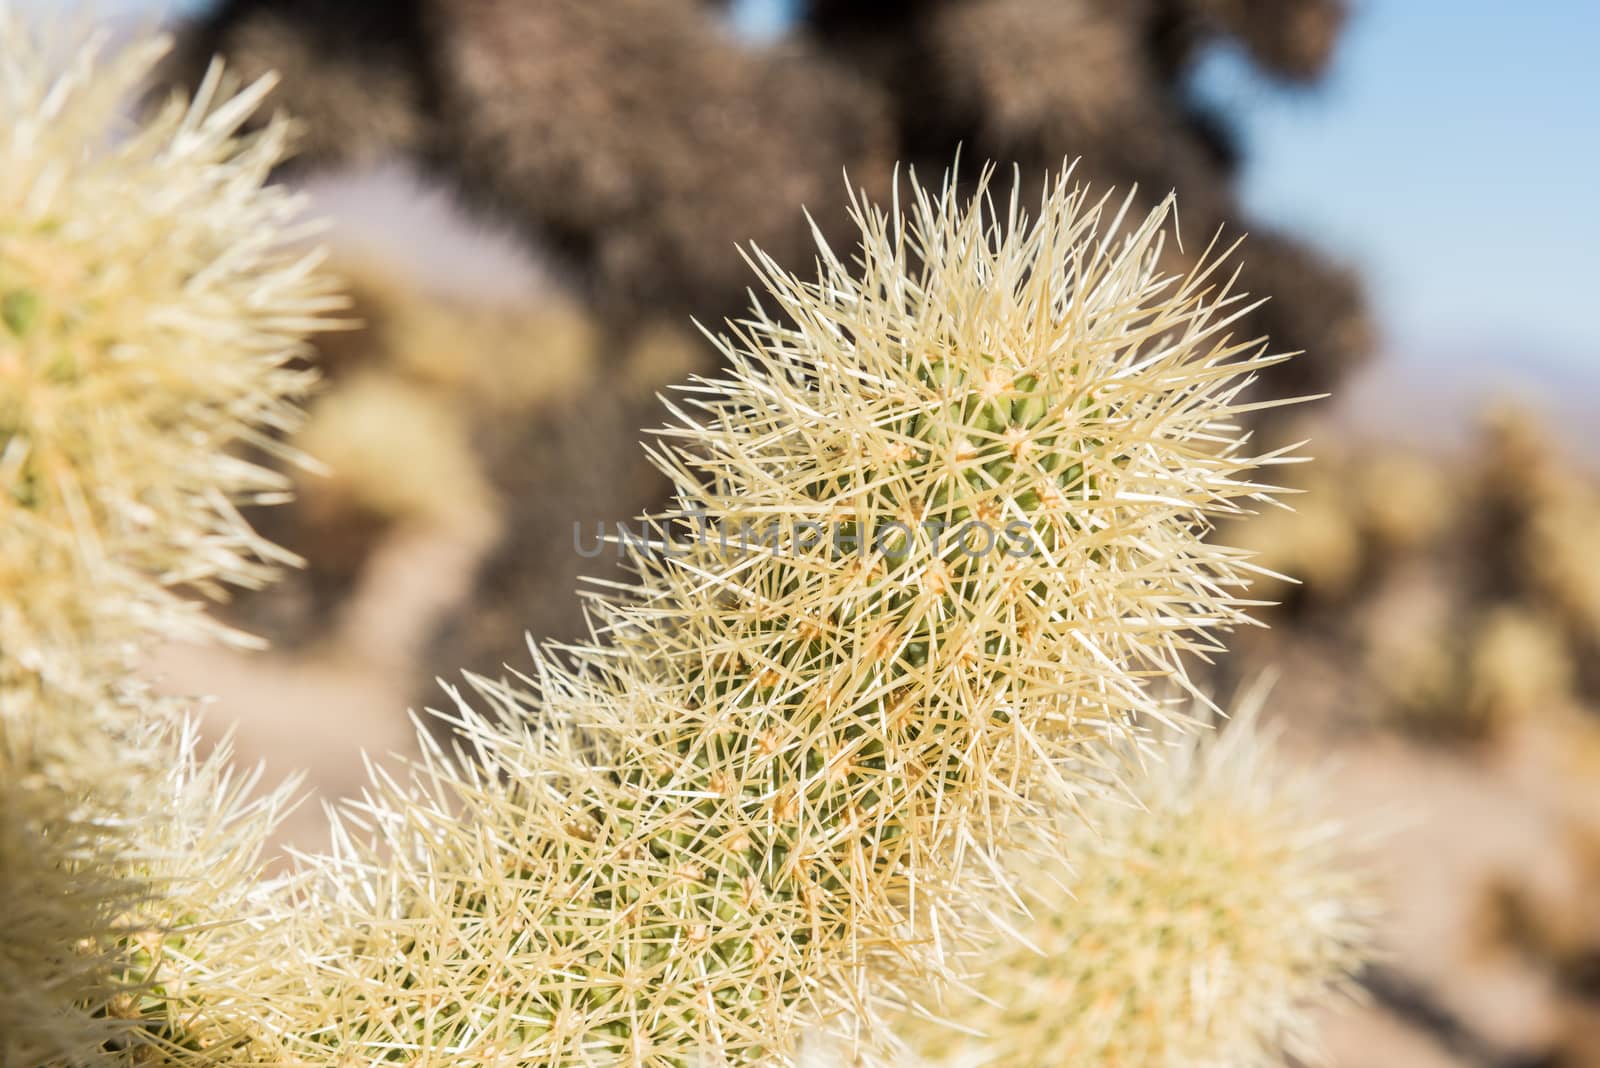 Cholla cactus (Cylindropuntia bigelovii) known as Teddy-bear cho by Njean